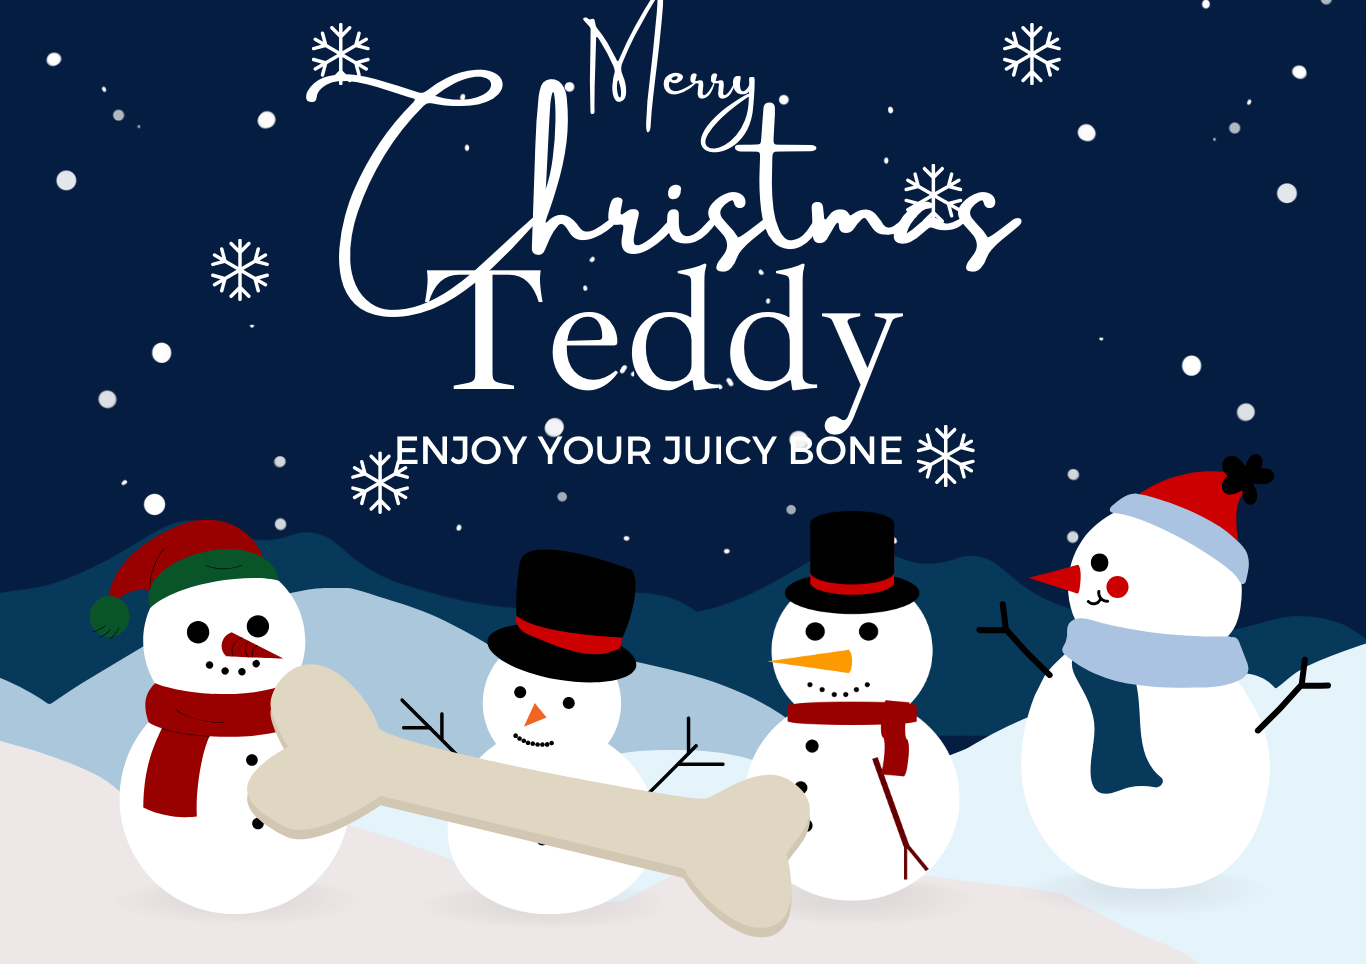 Send Steph a Virtual Christmas Card or Drink 🤶🍻